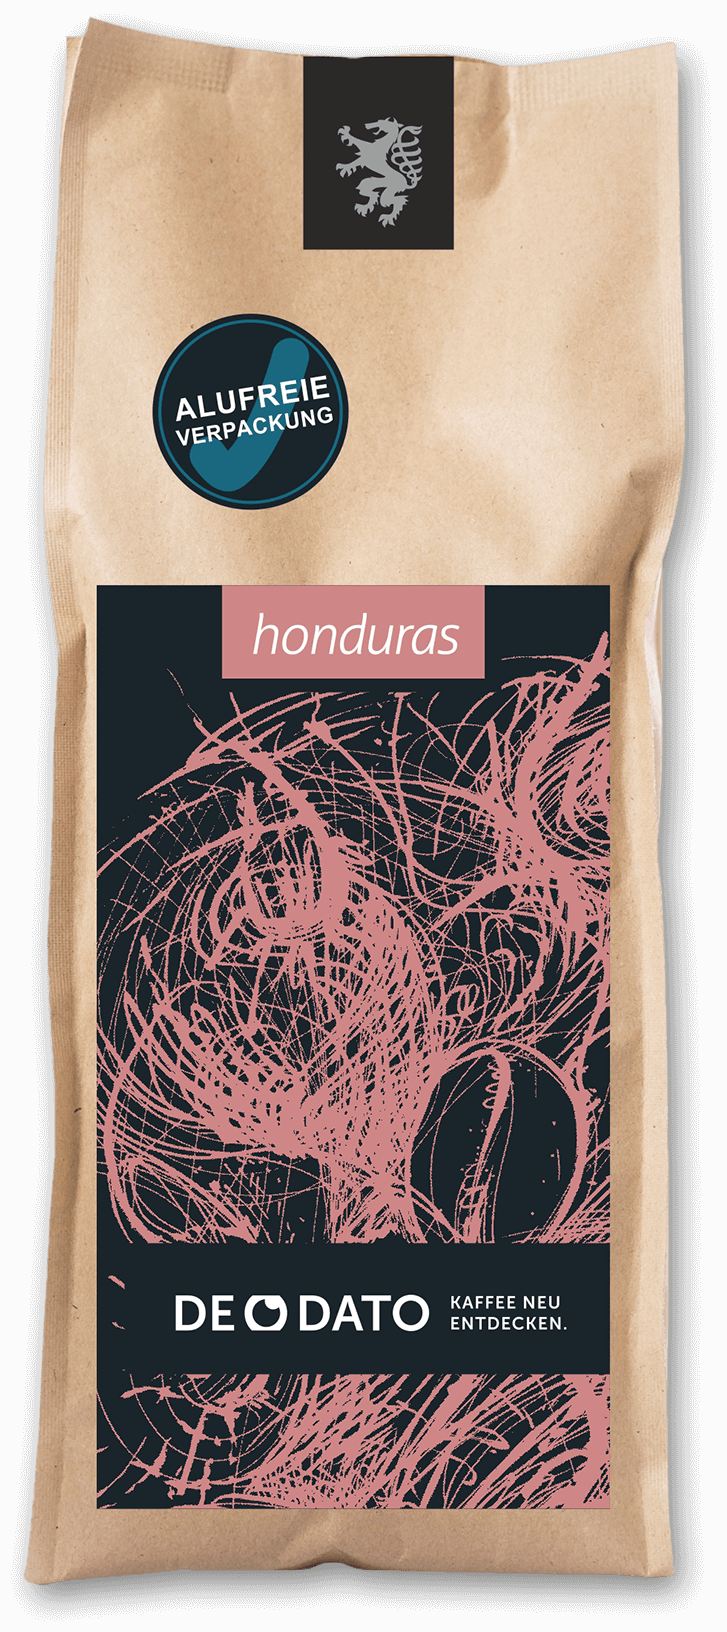 DEODATO Honduras ganze Bohnen - 500 g